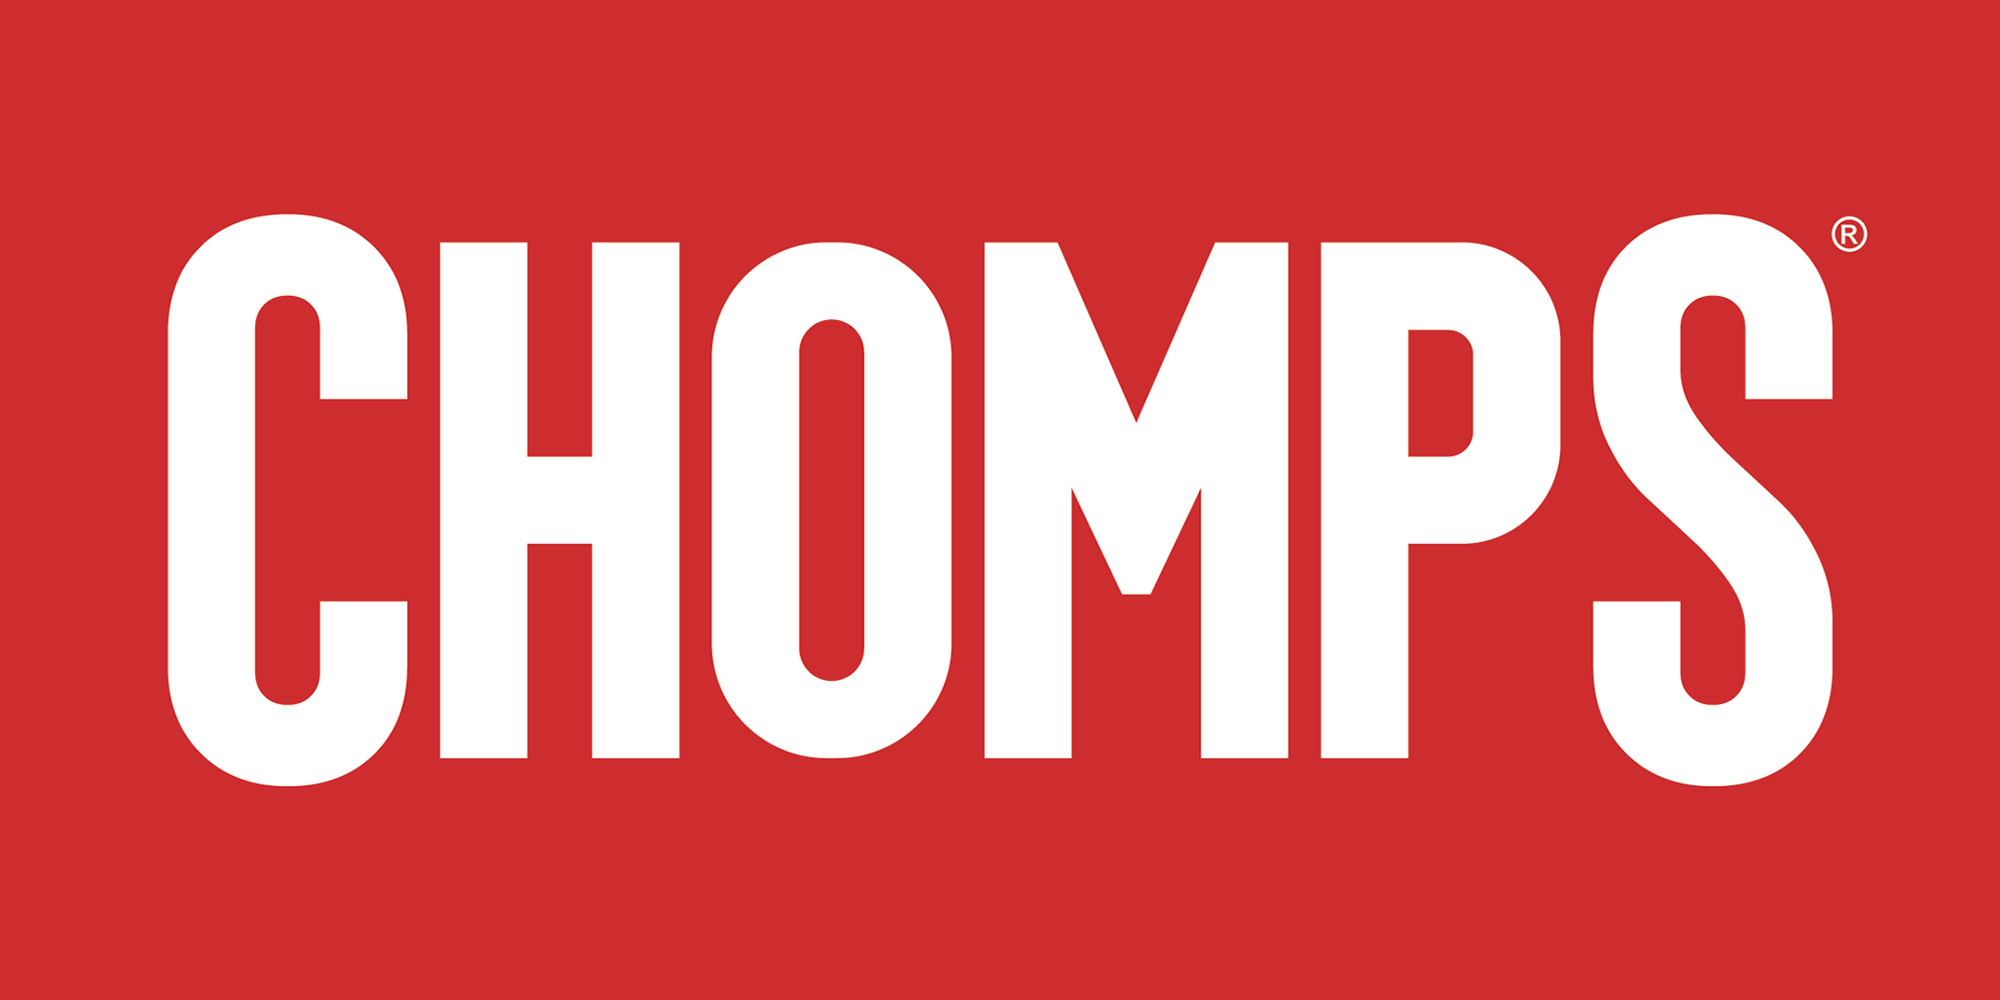 Chomps logo